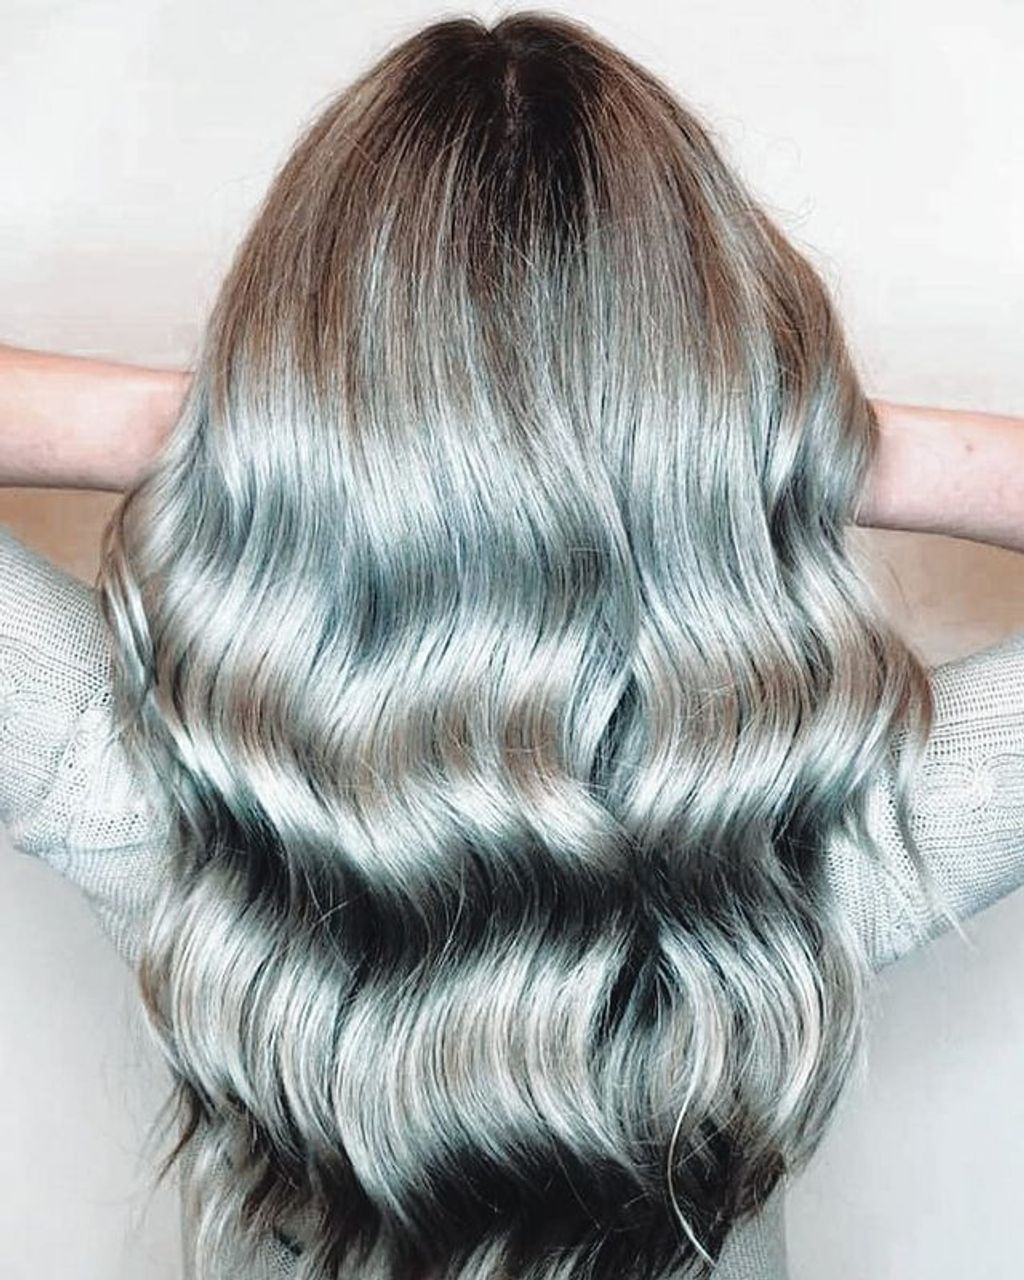 Forrás: Instagram/Hairdreams France